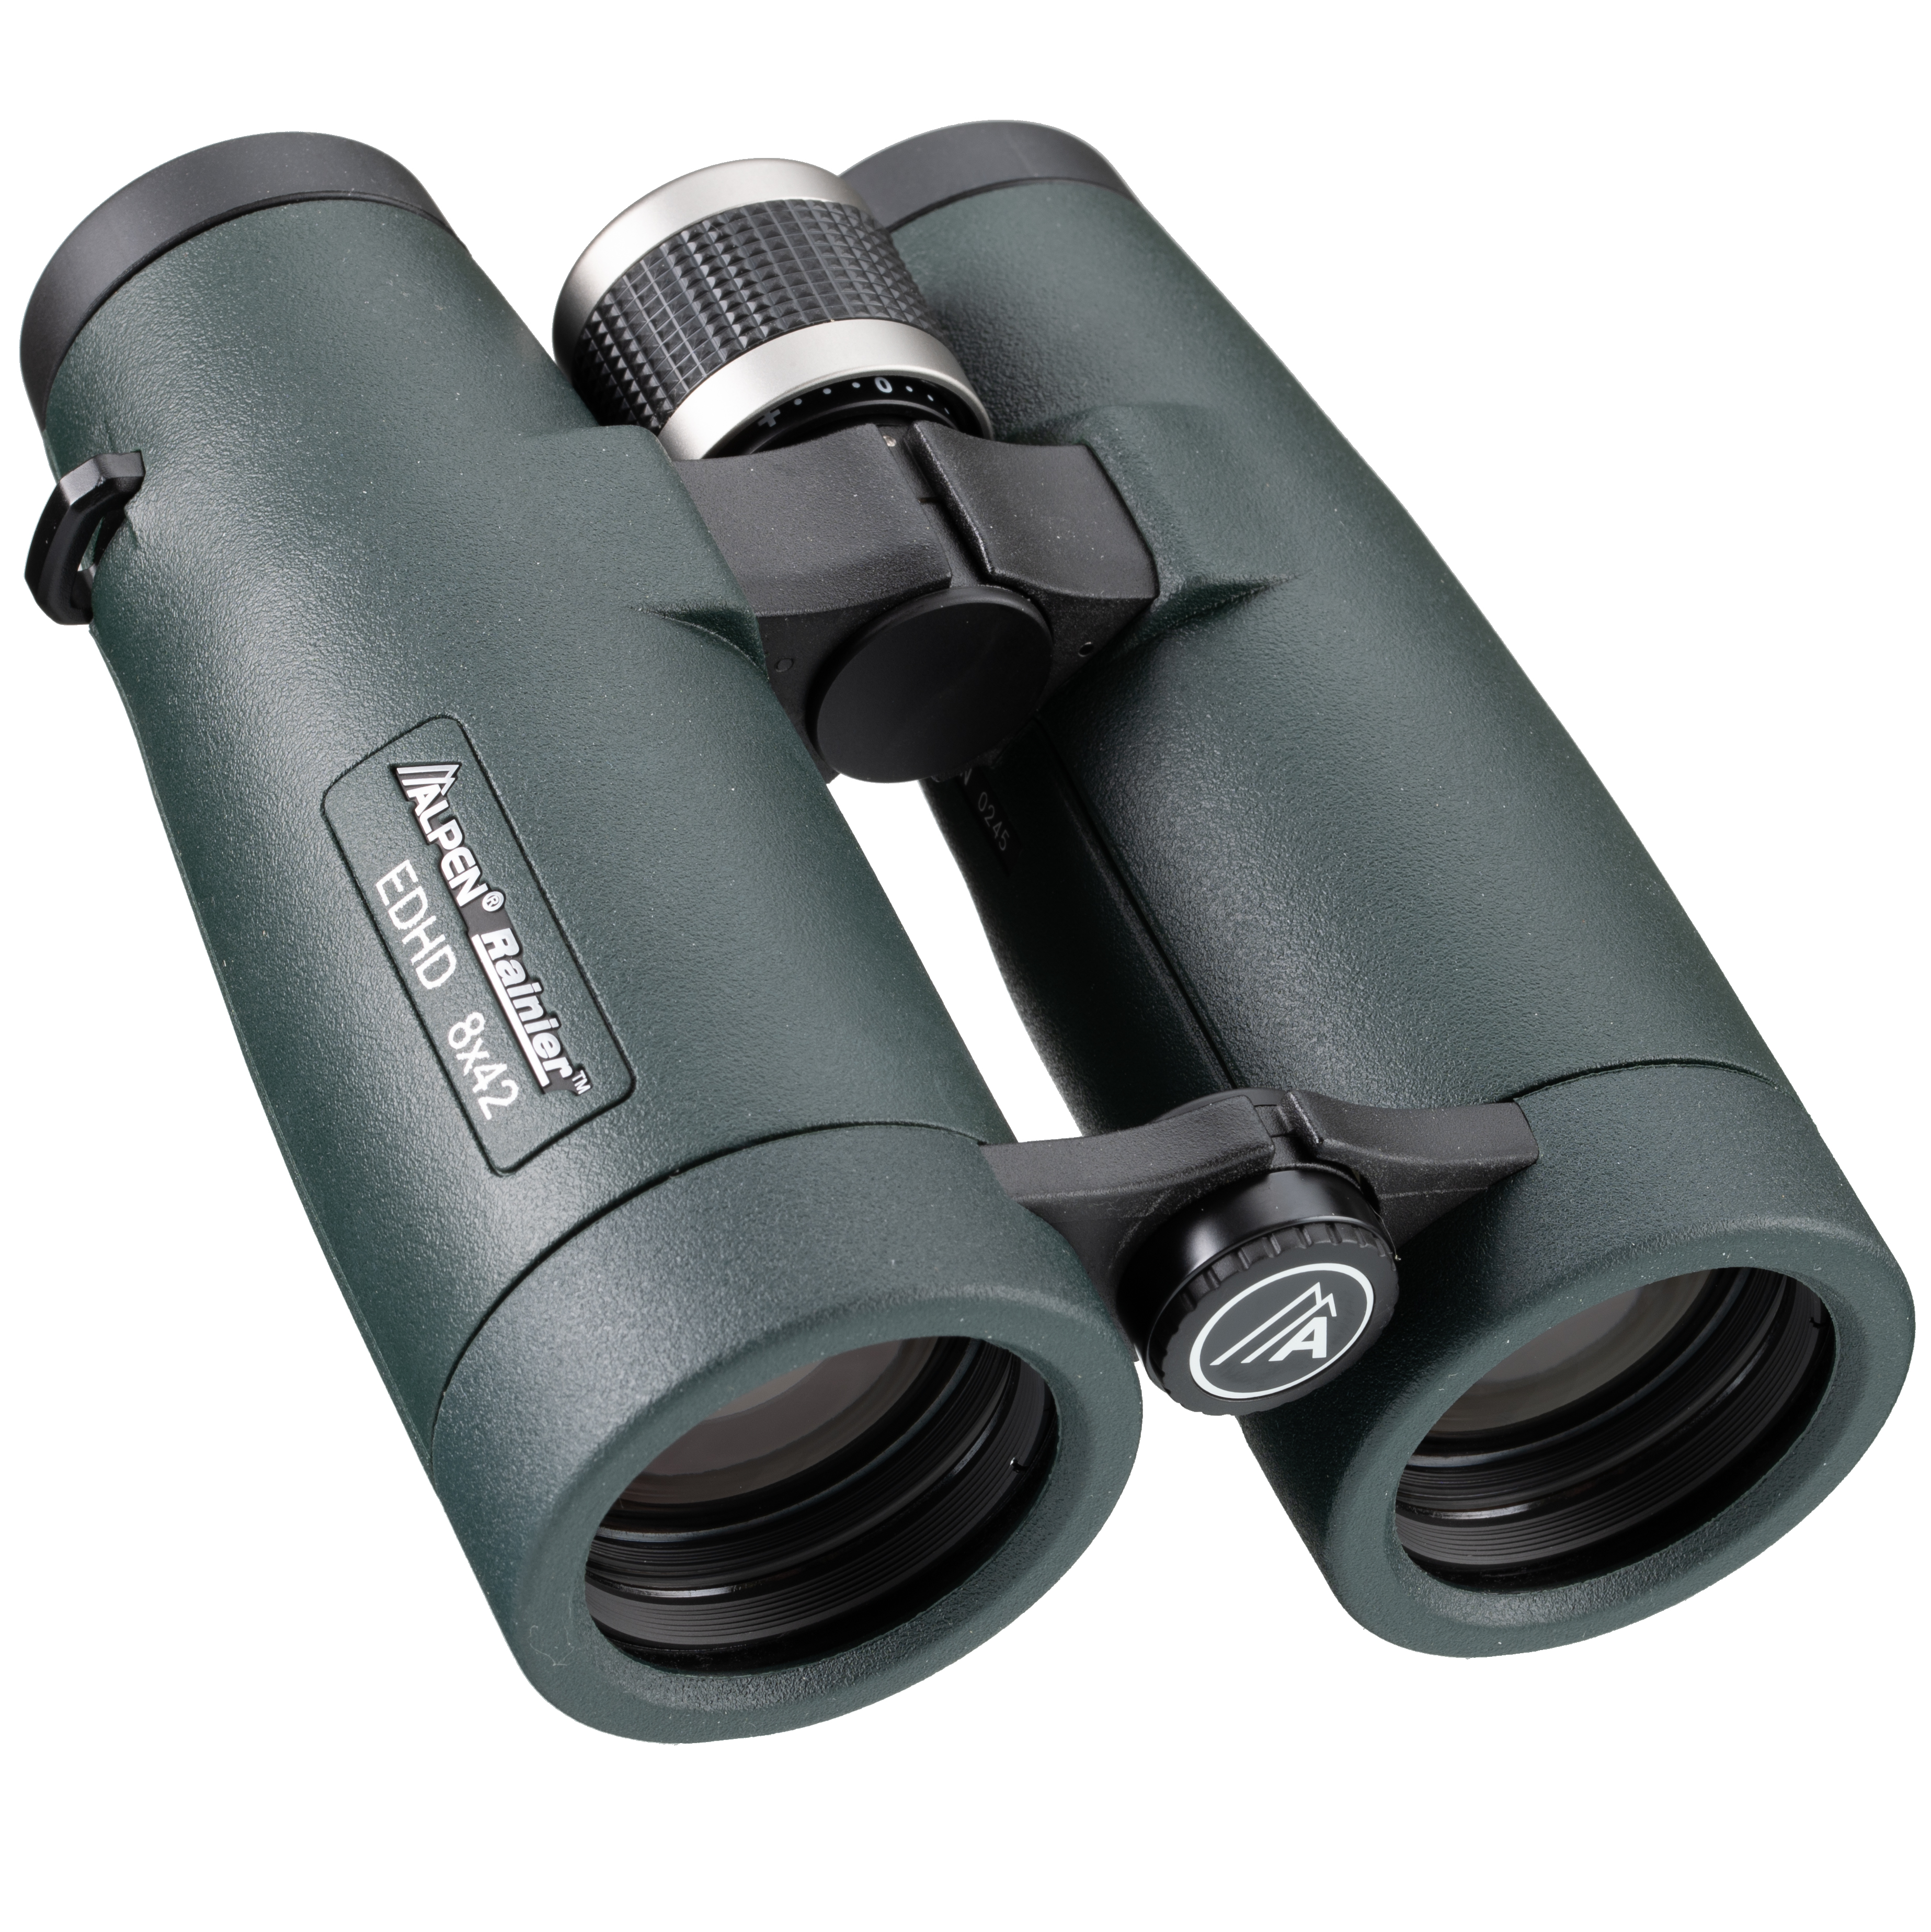 ALPEN OPTICS Rainier 10x42 HD binoculars with ED glass and magnesium housing